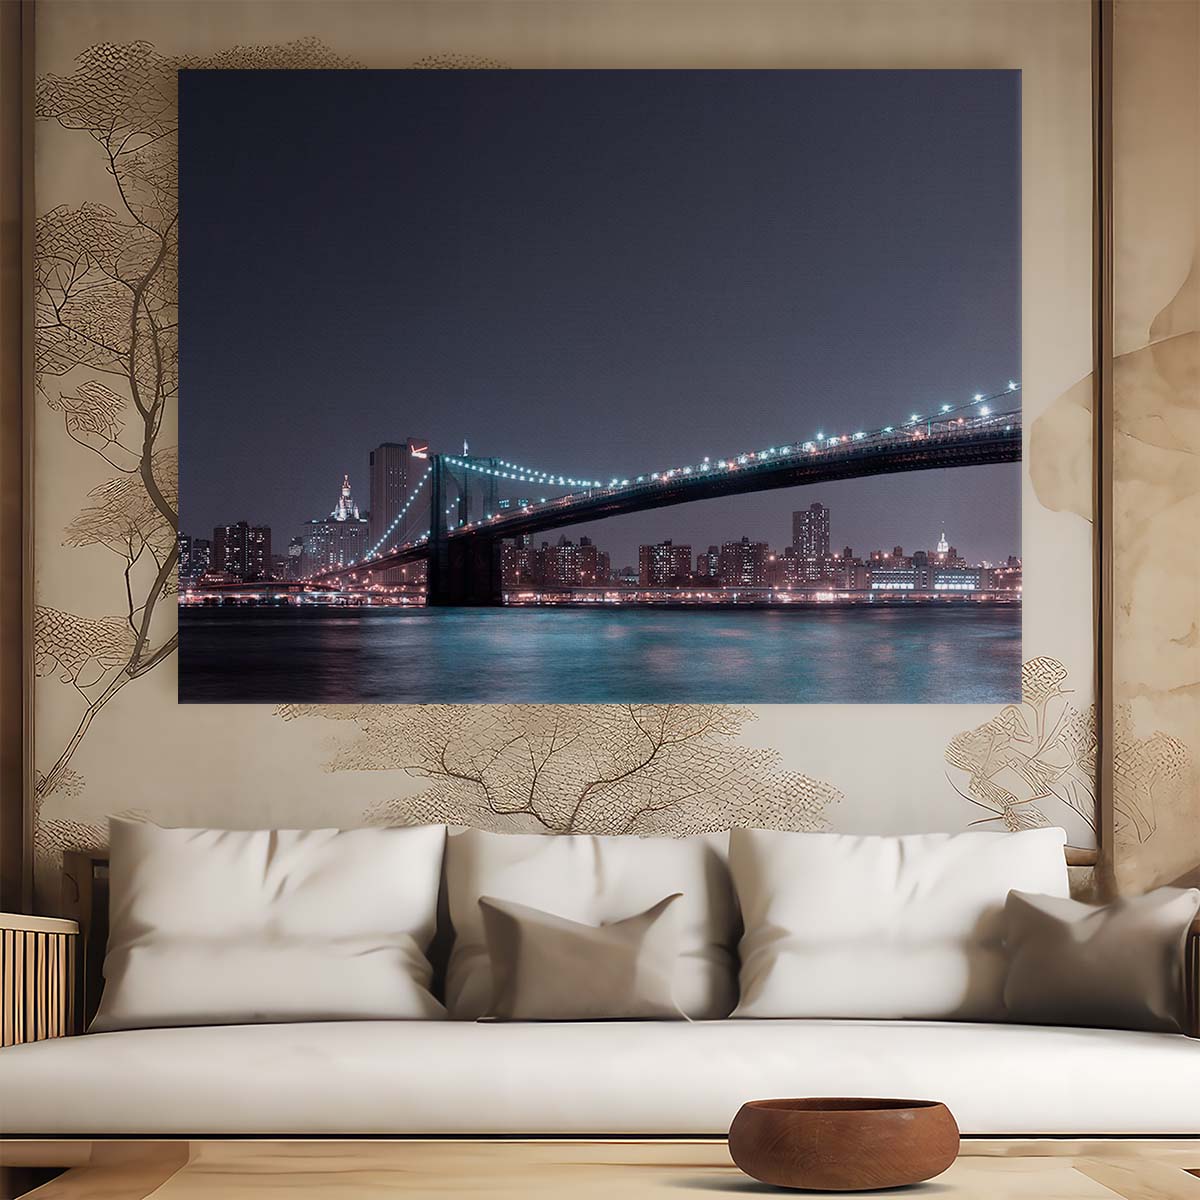 Iconic Brooklyn Bridge NYC Skyline Panorama Wall Art by Luxuriance Designs. Made in USA.